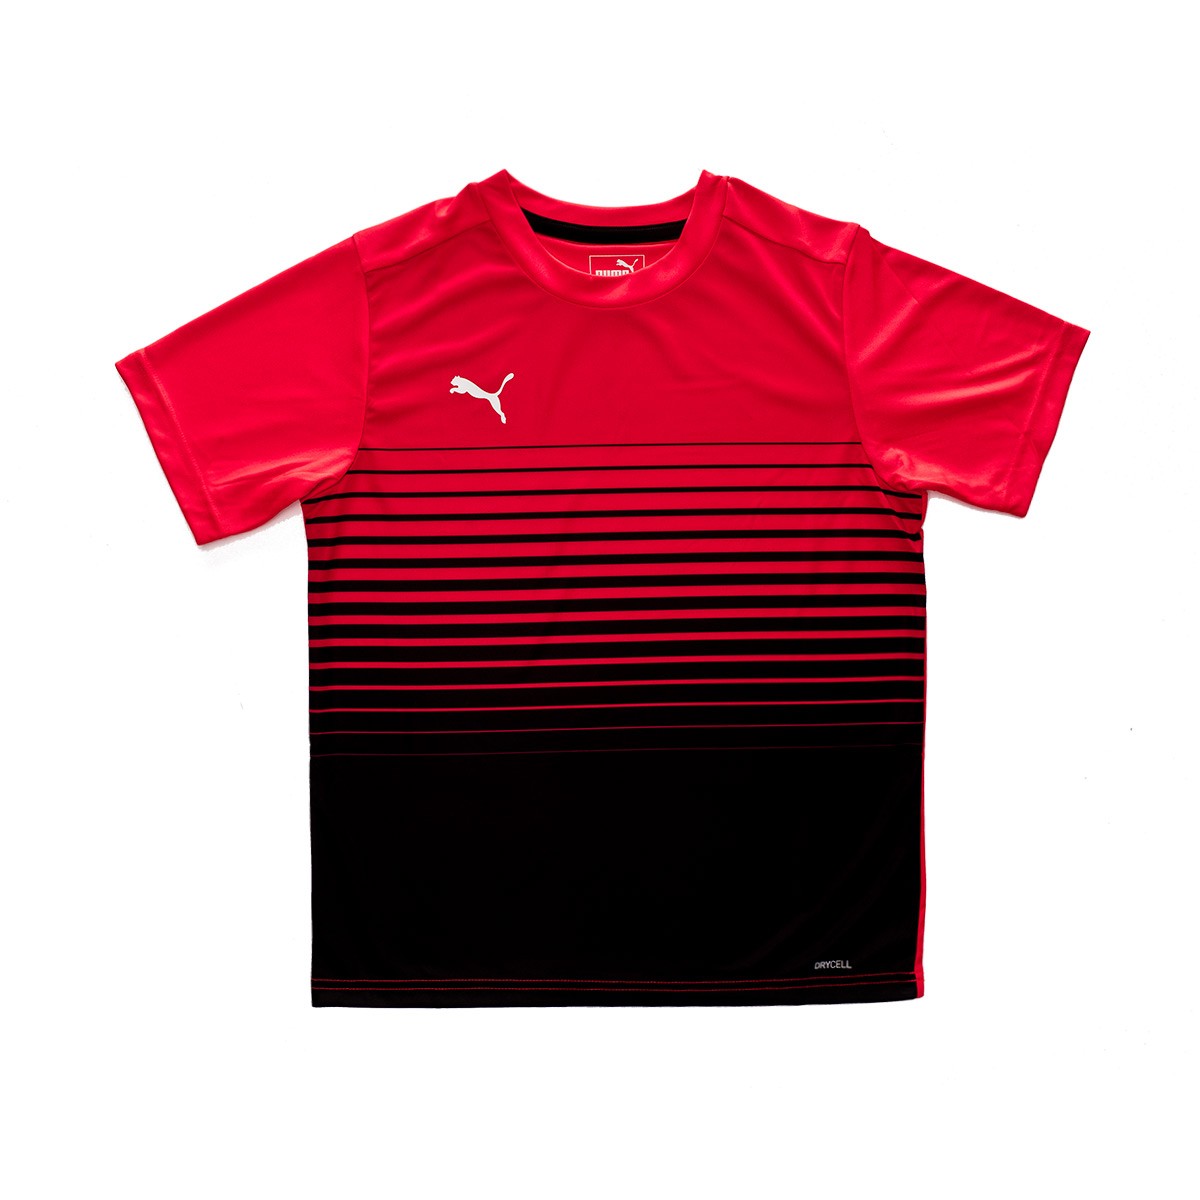 Jersey Puma Ftblplay Graphic Nino Red Blast Black Football Store